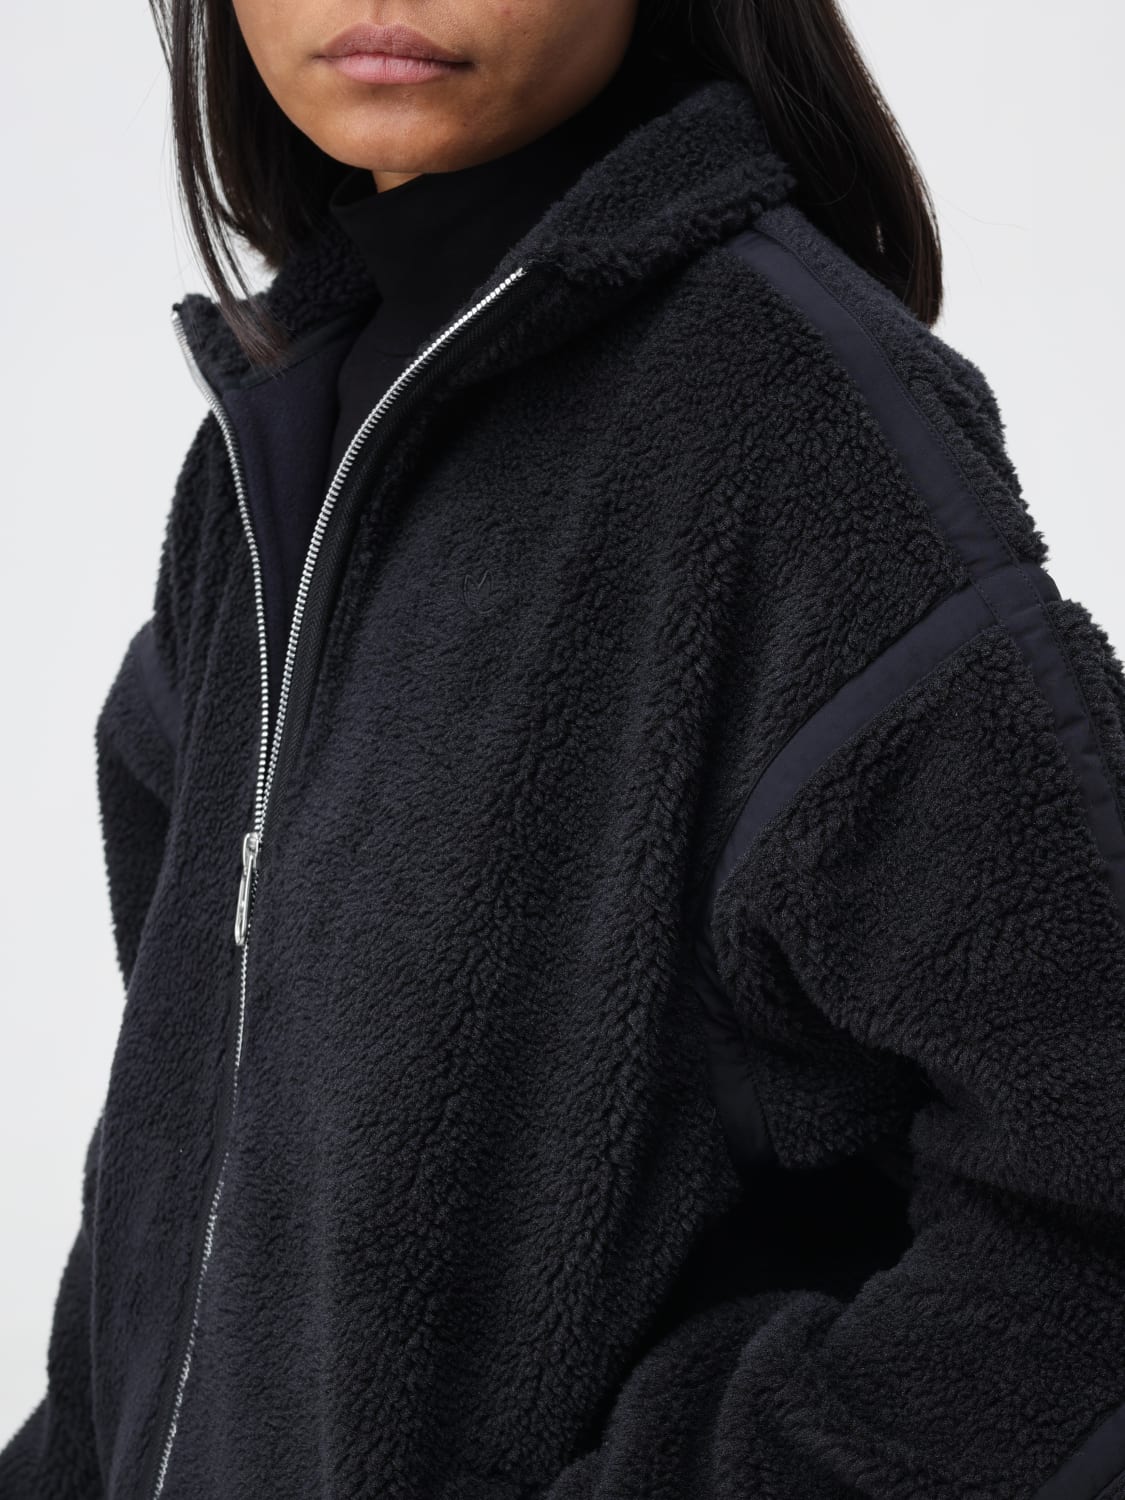 ADIDAS ORIGINALS: Damen Sweatshirt - Schwarz | Adidas Originals Sweatshirt  II8041 online auf